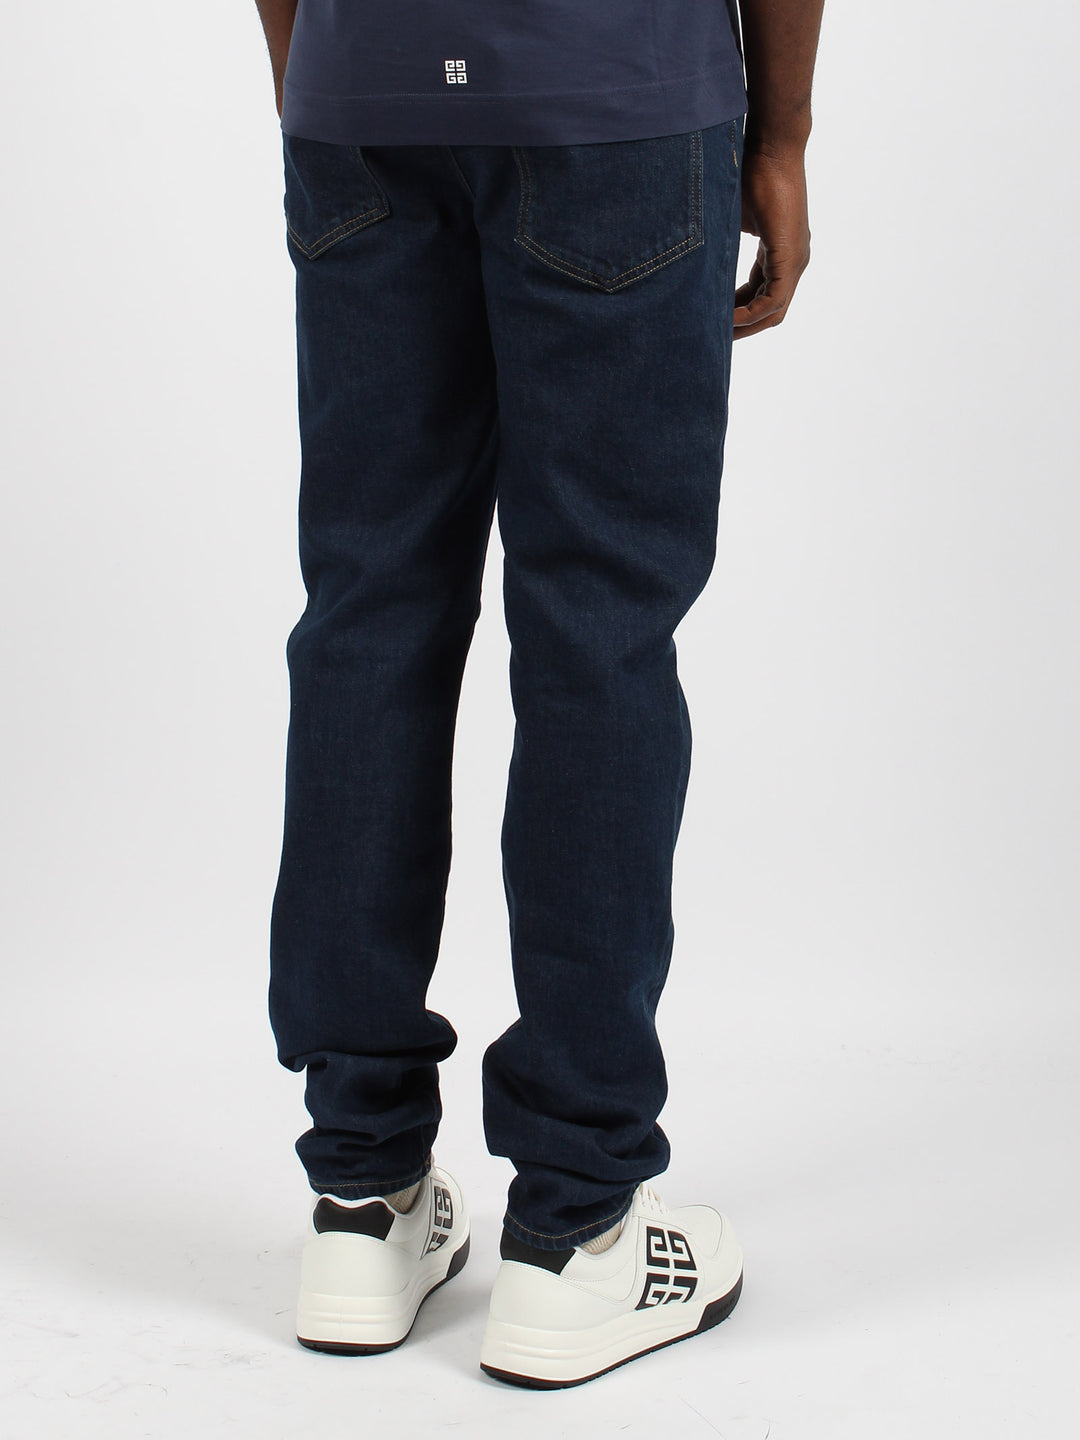 Indigo blue denim jeans